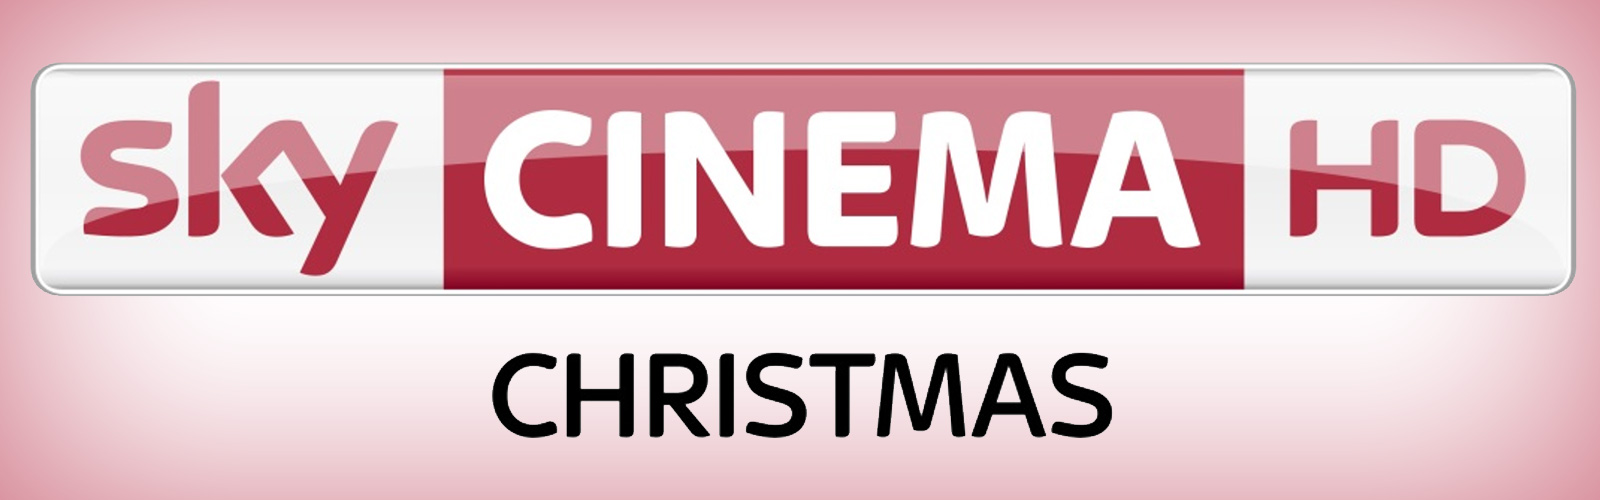 Sky Cinema Christmas 2016